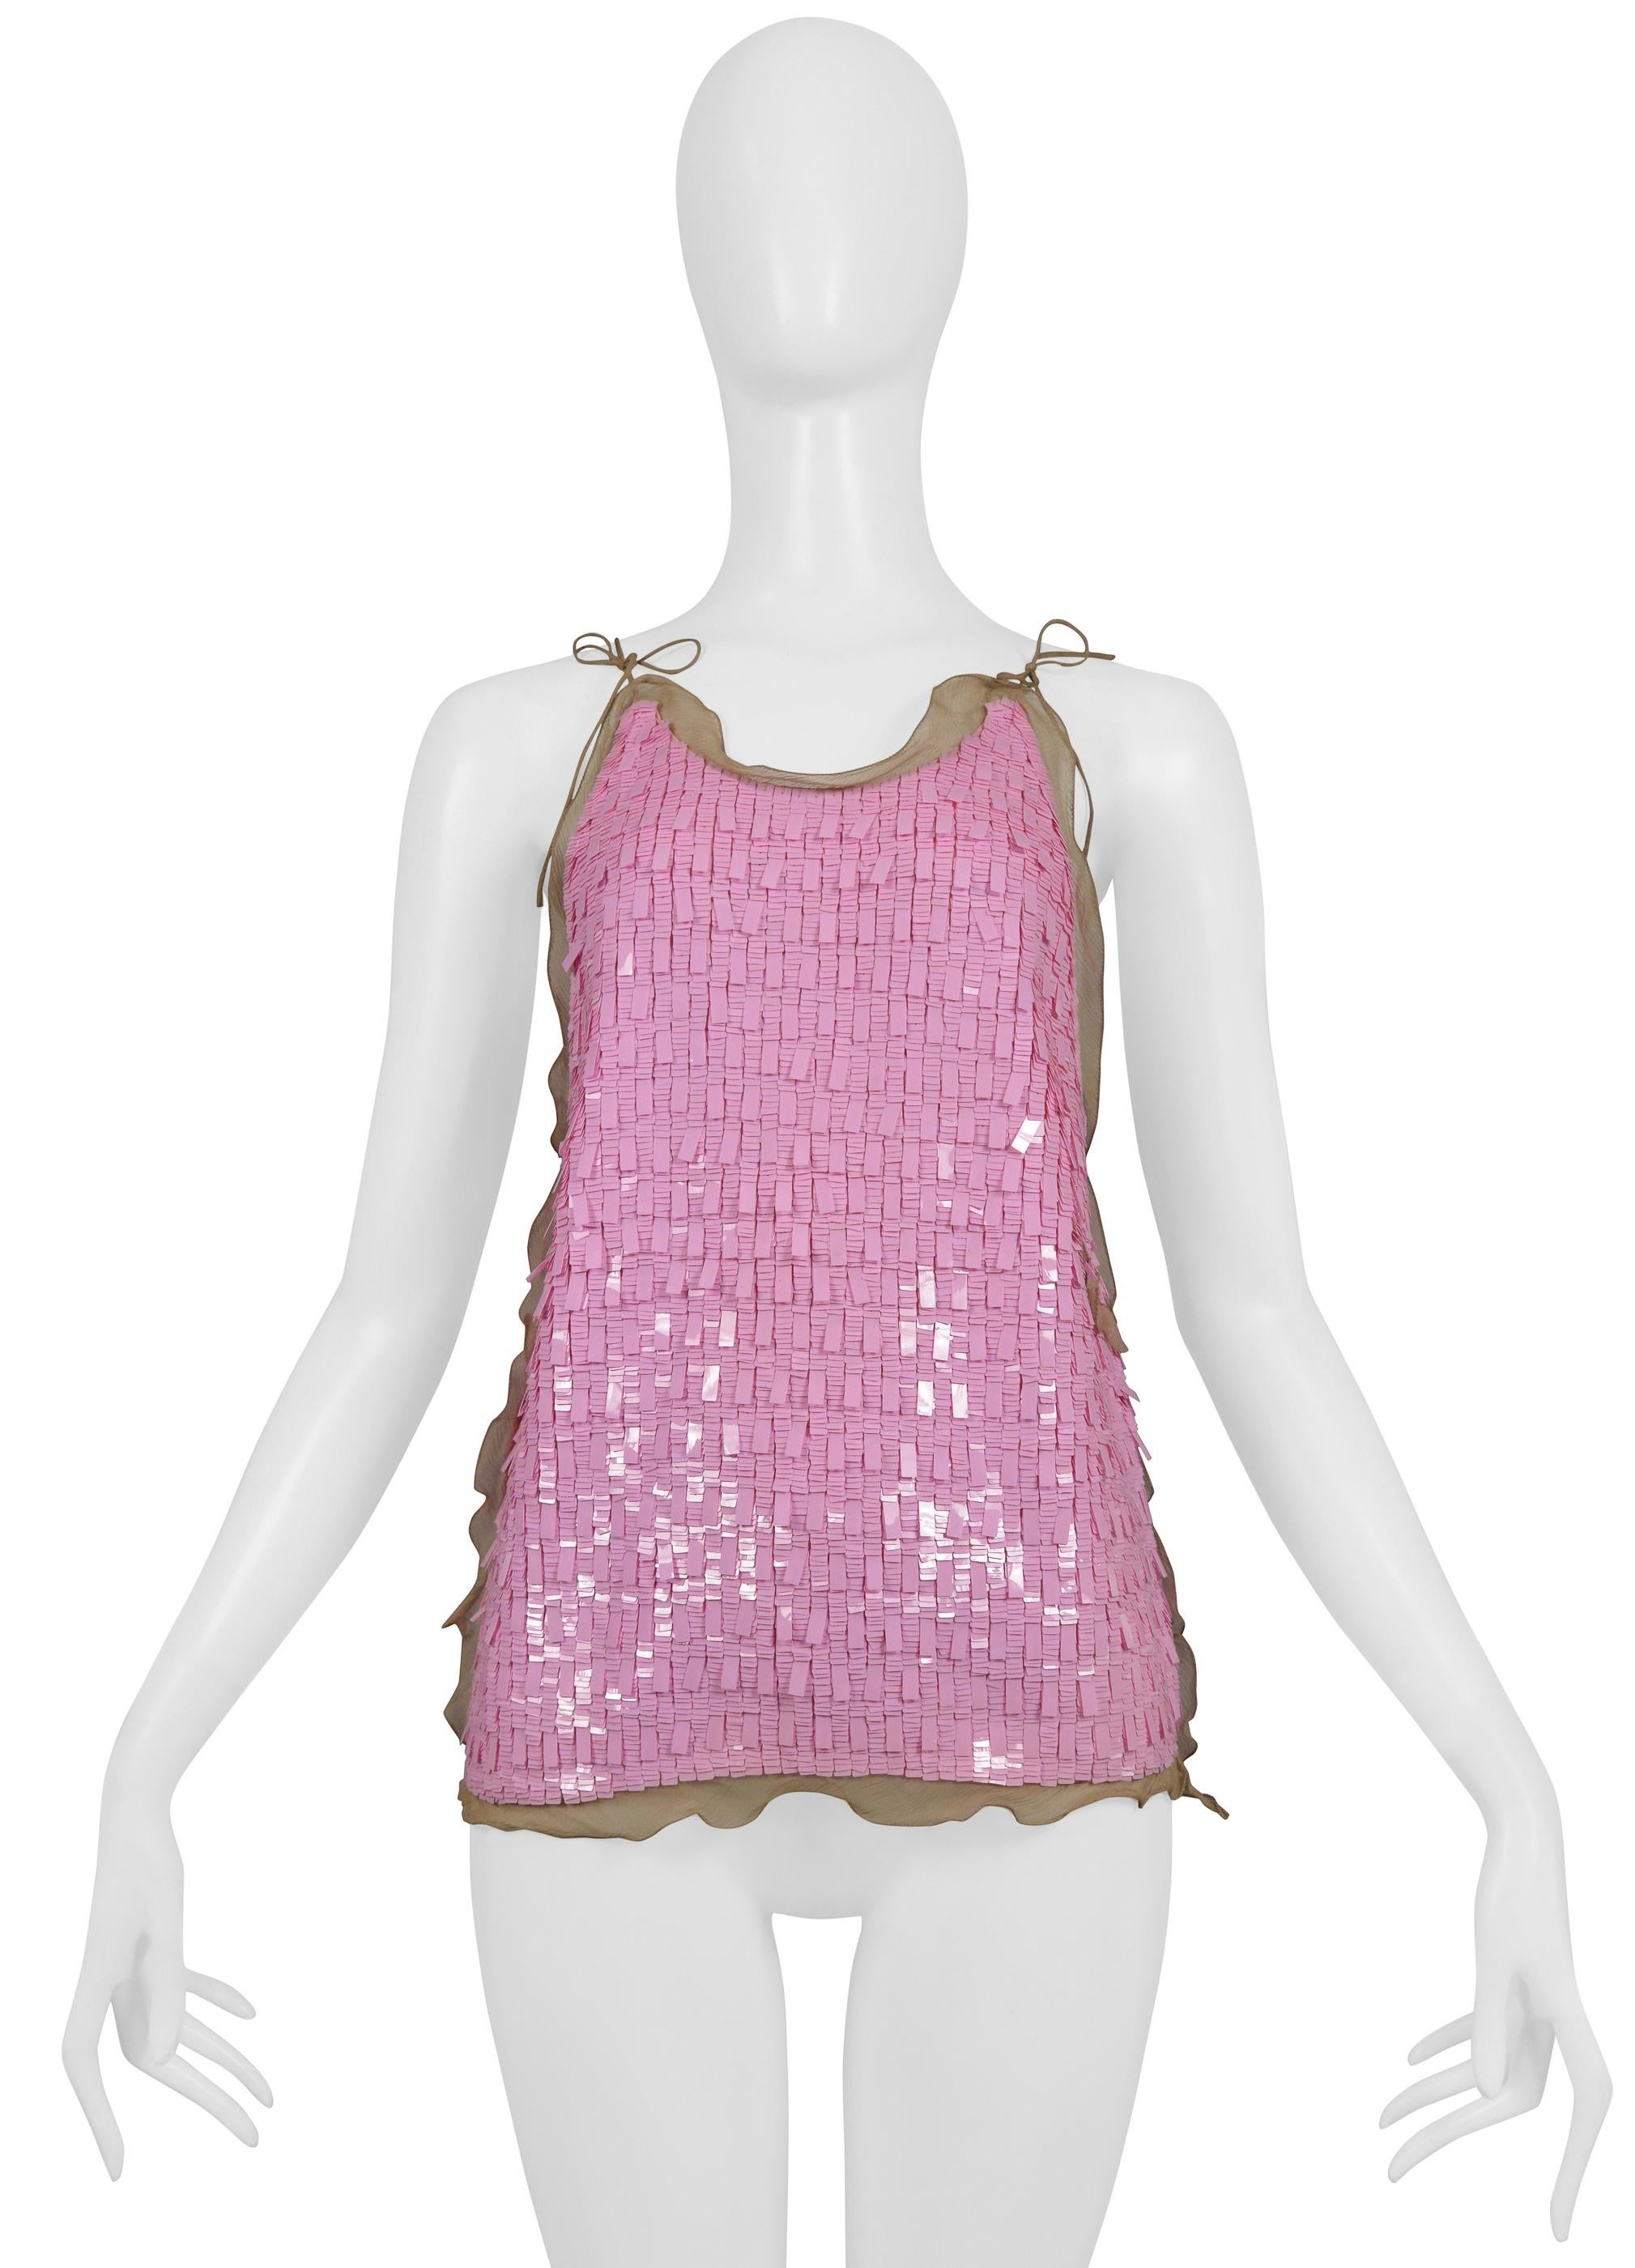 Fendi By Karl Lagerfeld Pink Sequin Pailette Ruffle Top 2000 For Sale 1